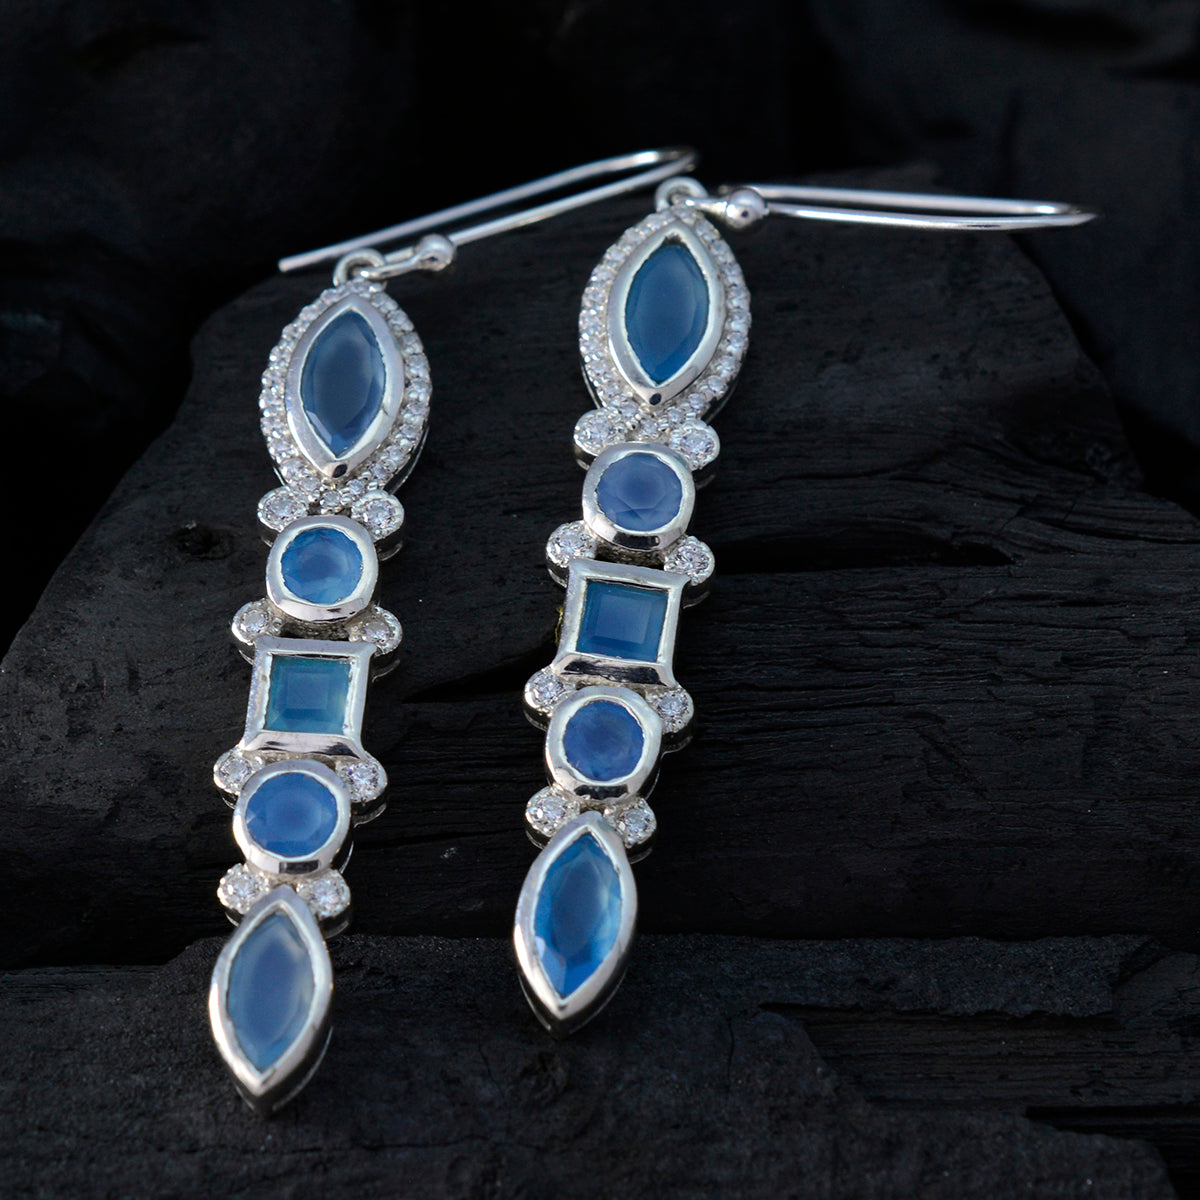 Riyo Glamouröser Sterlingsilber-Ohrring für Demoiselle, blauer Chalcedon-Ohrring, Lünettenfassung, blauer Ohrring, baumelnder Ohrring